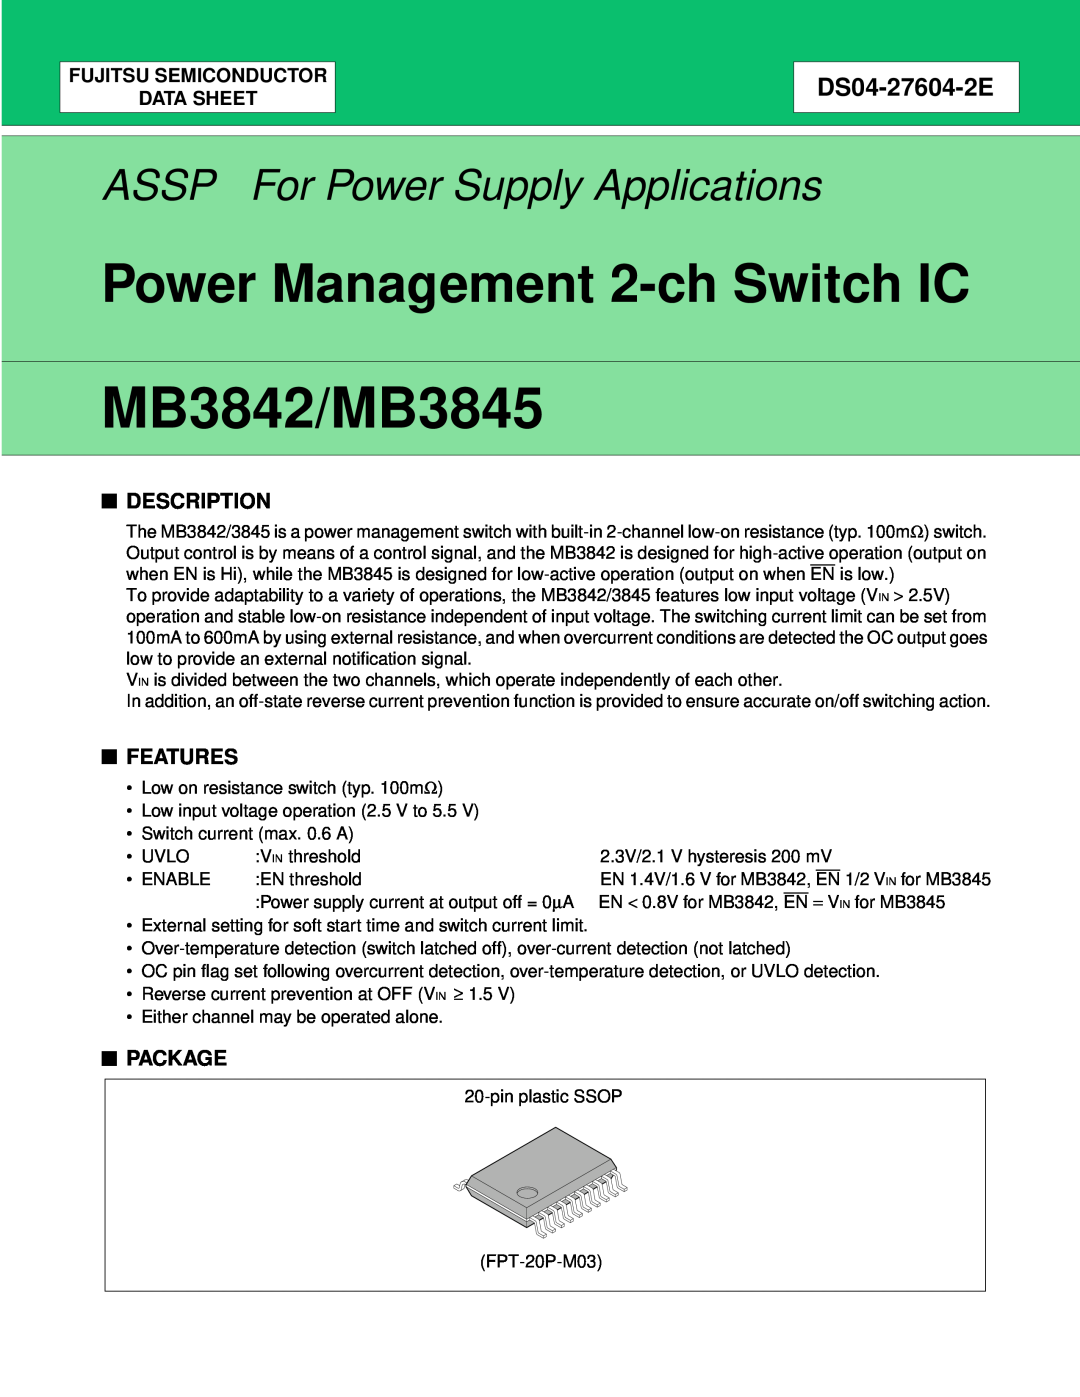 Fujitsu manual Description, Features, Package, Fujitsu Semiconductor Data Sheet, MB3842/MB3845, DS04-27604-2E 